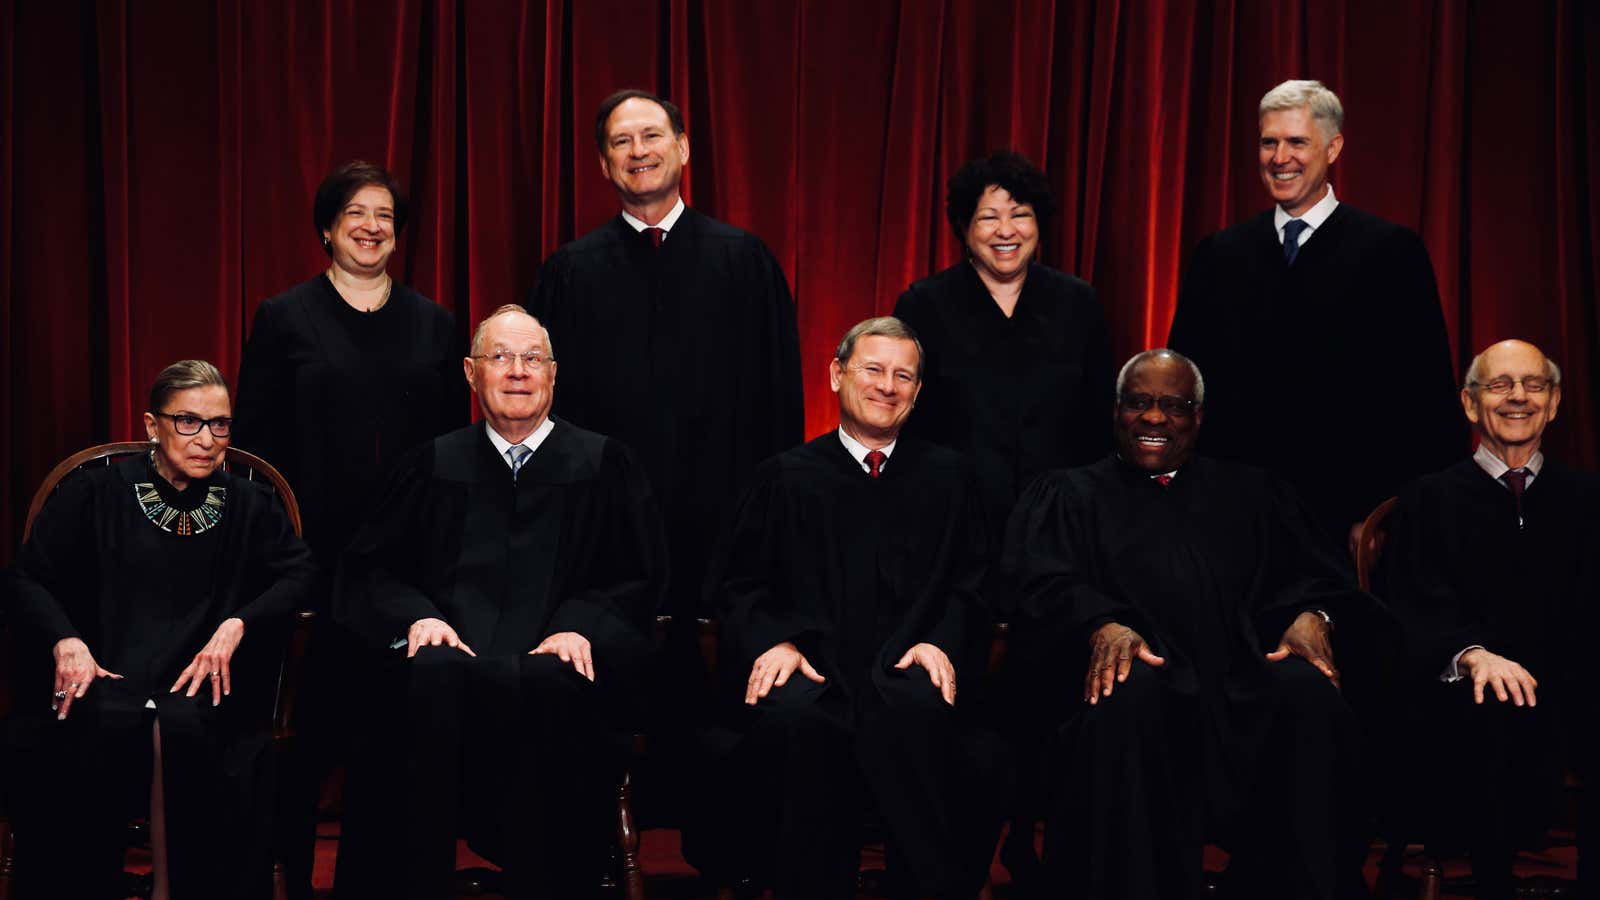 US Supreme Court family photo.